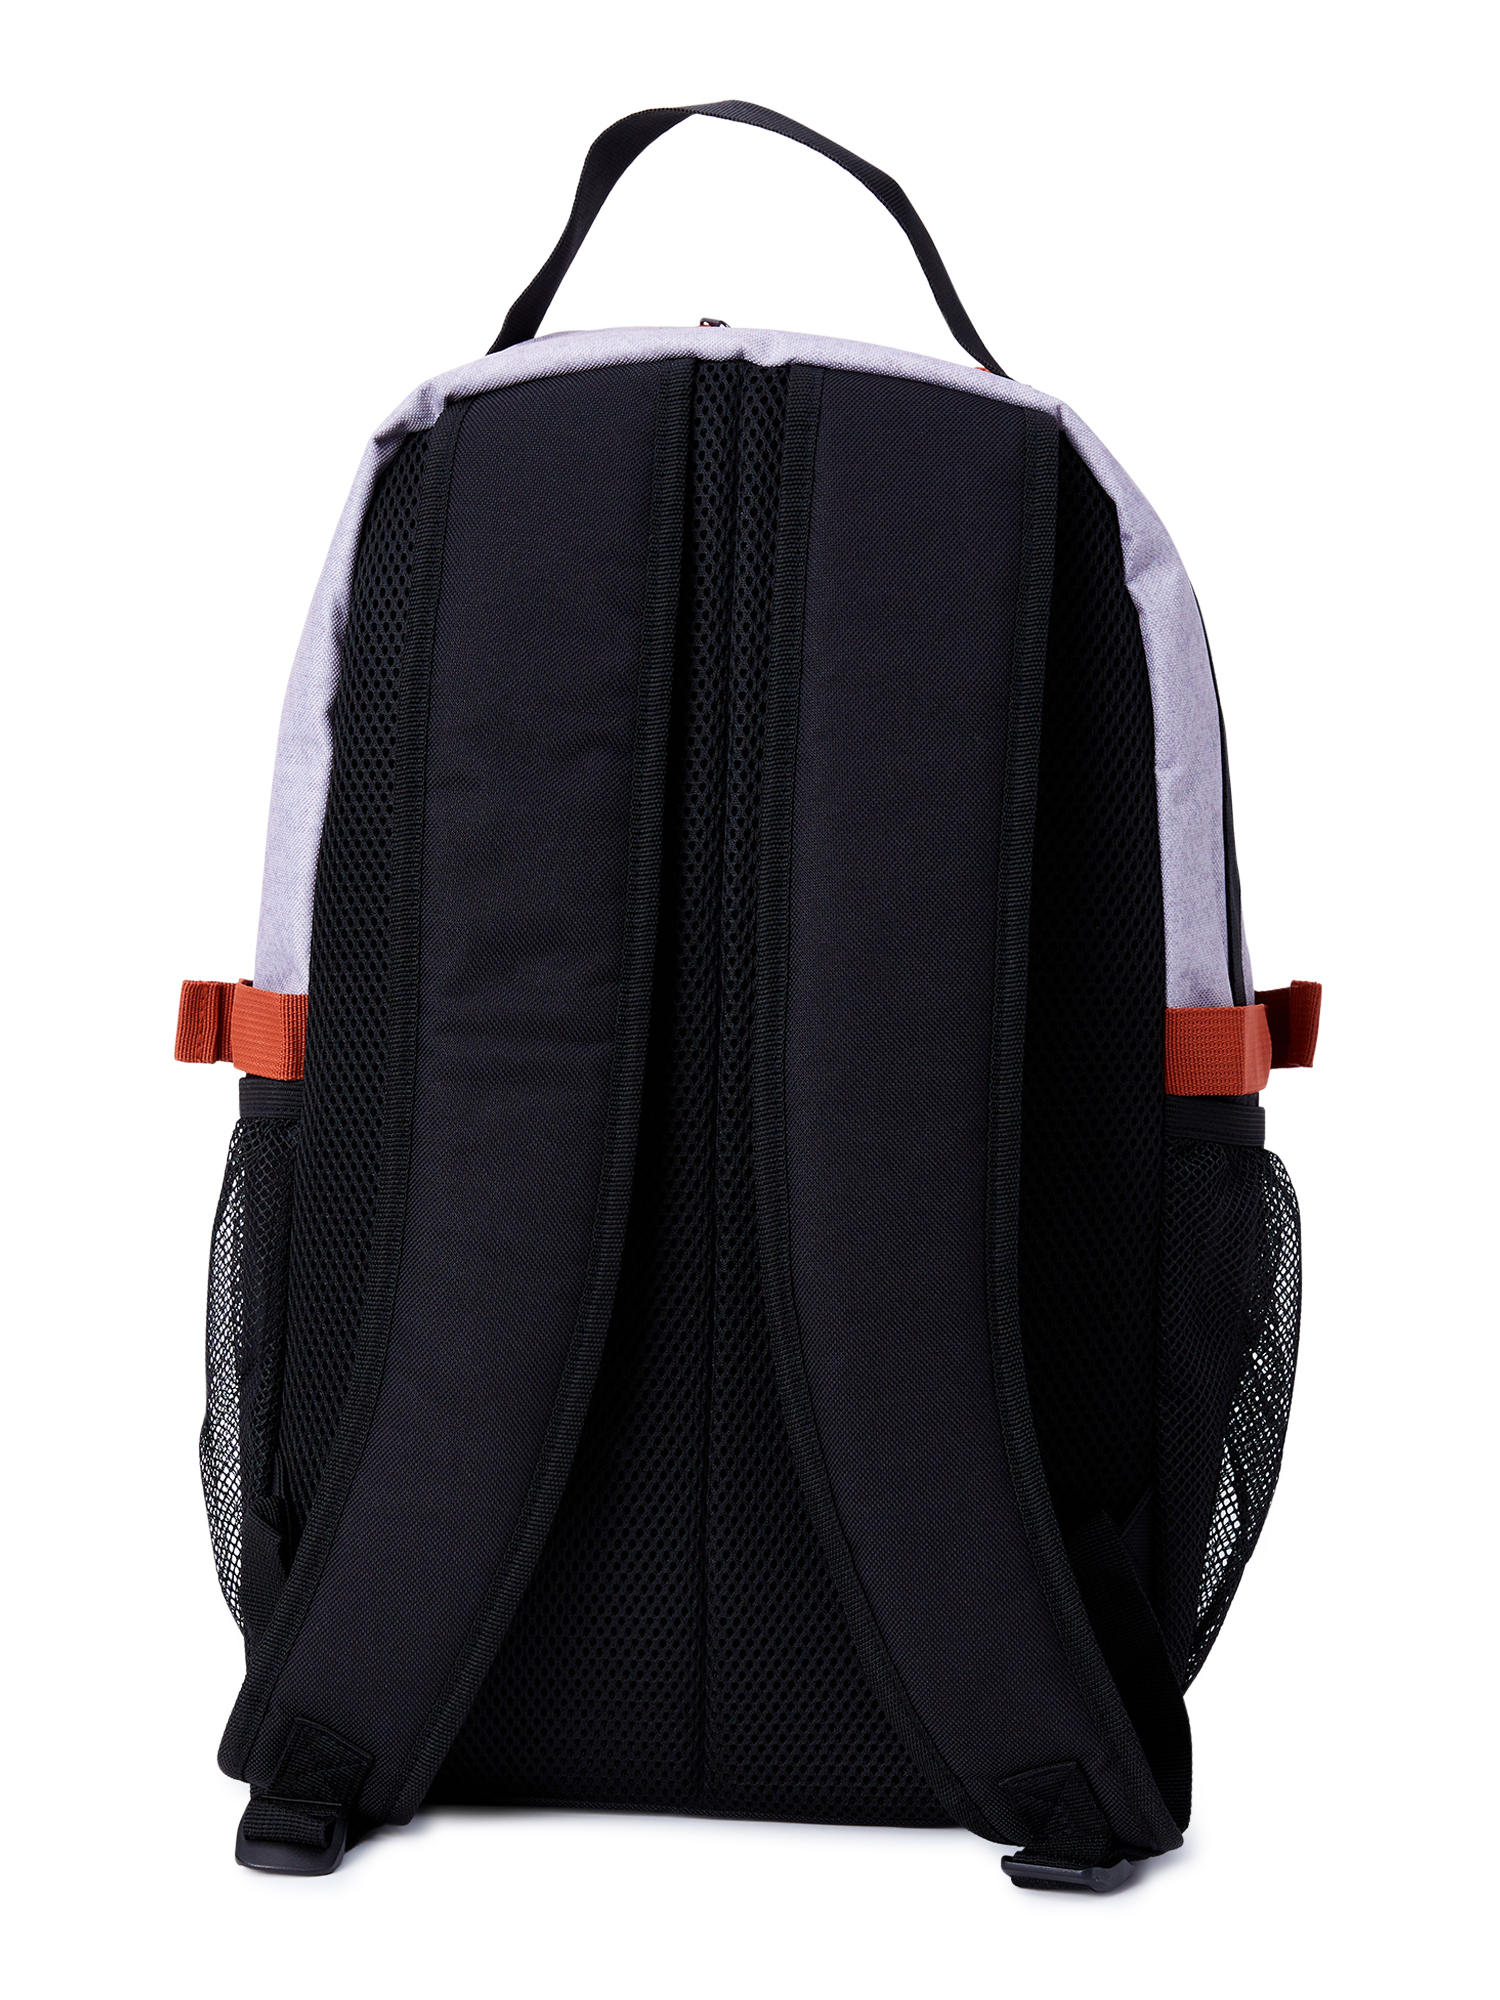 Dragon Ball Z Gohan Unisex 18" Laptop Backpack, Grey Black - image 3 of 5